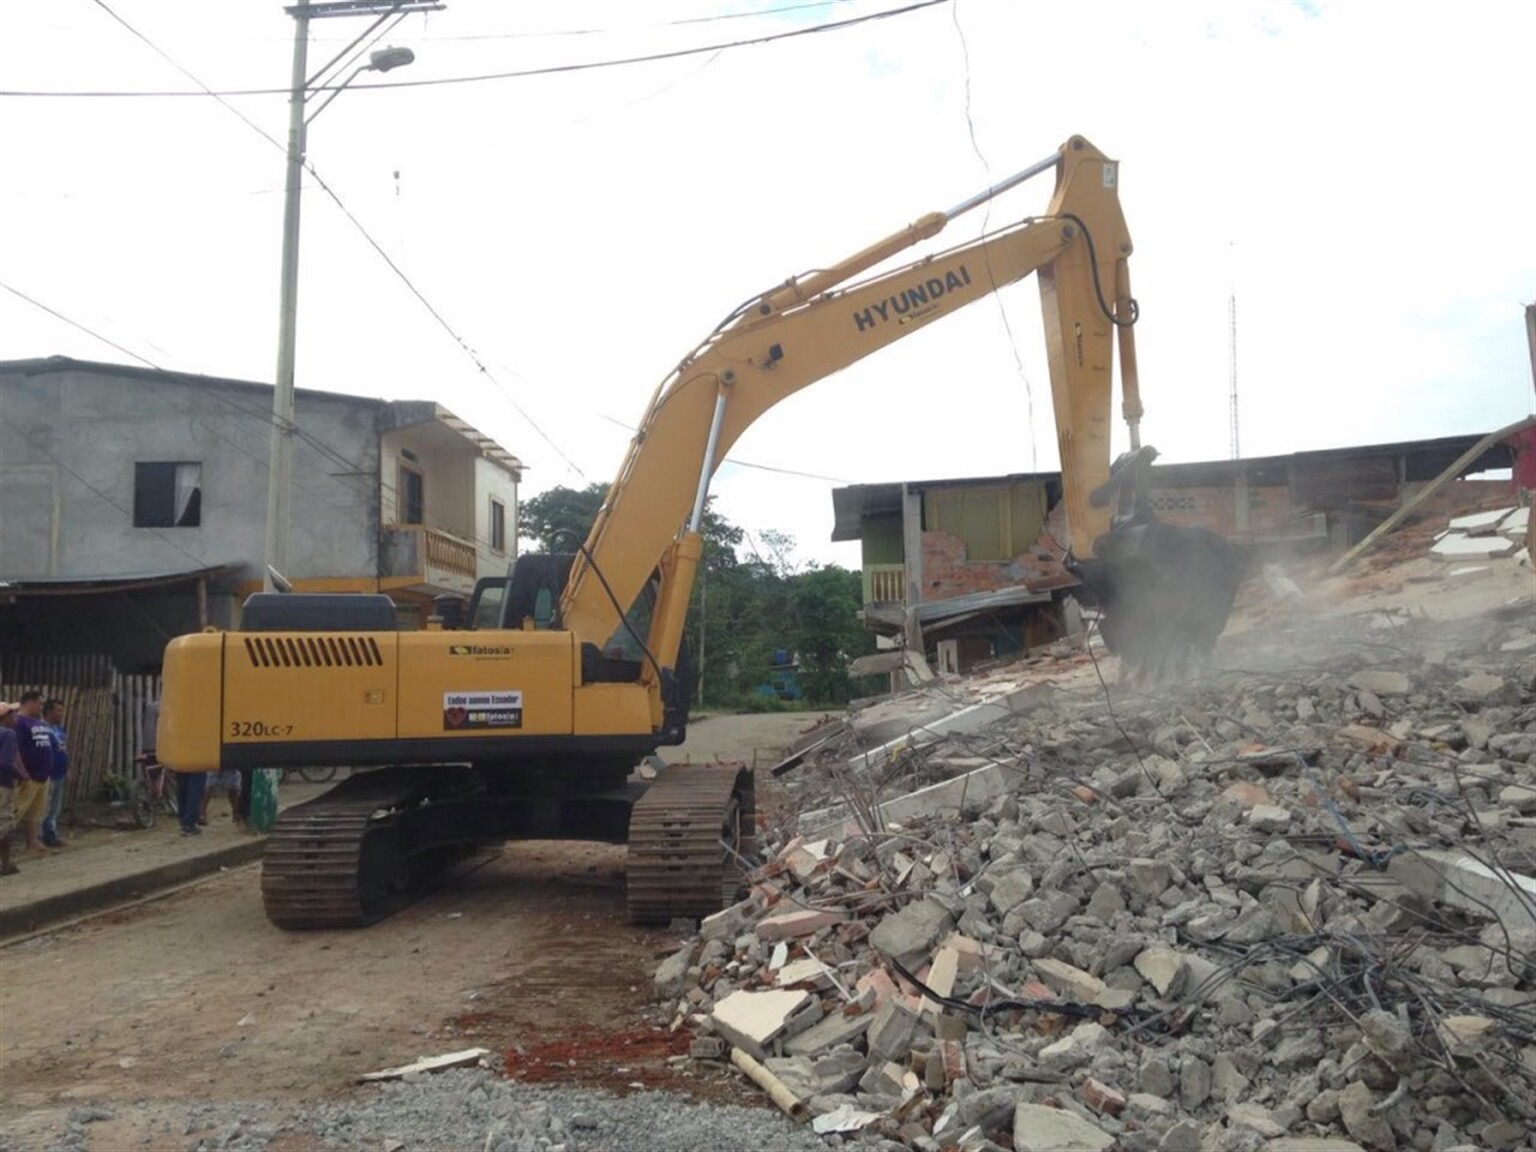 Hyundai sends excavators to Ecuador